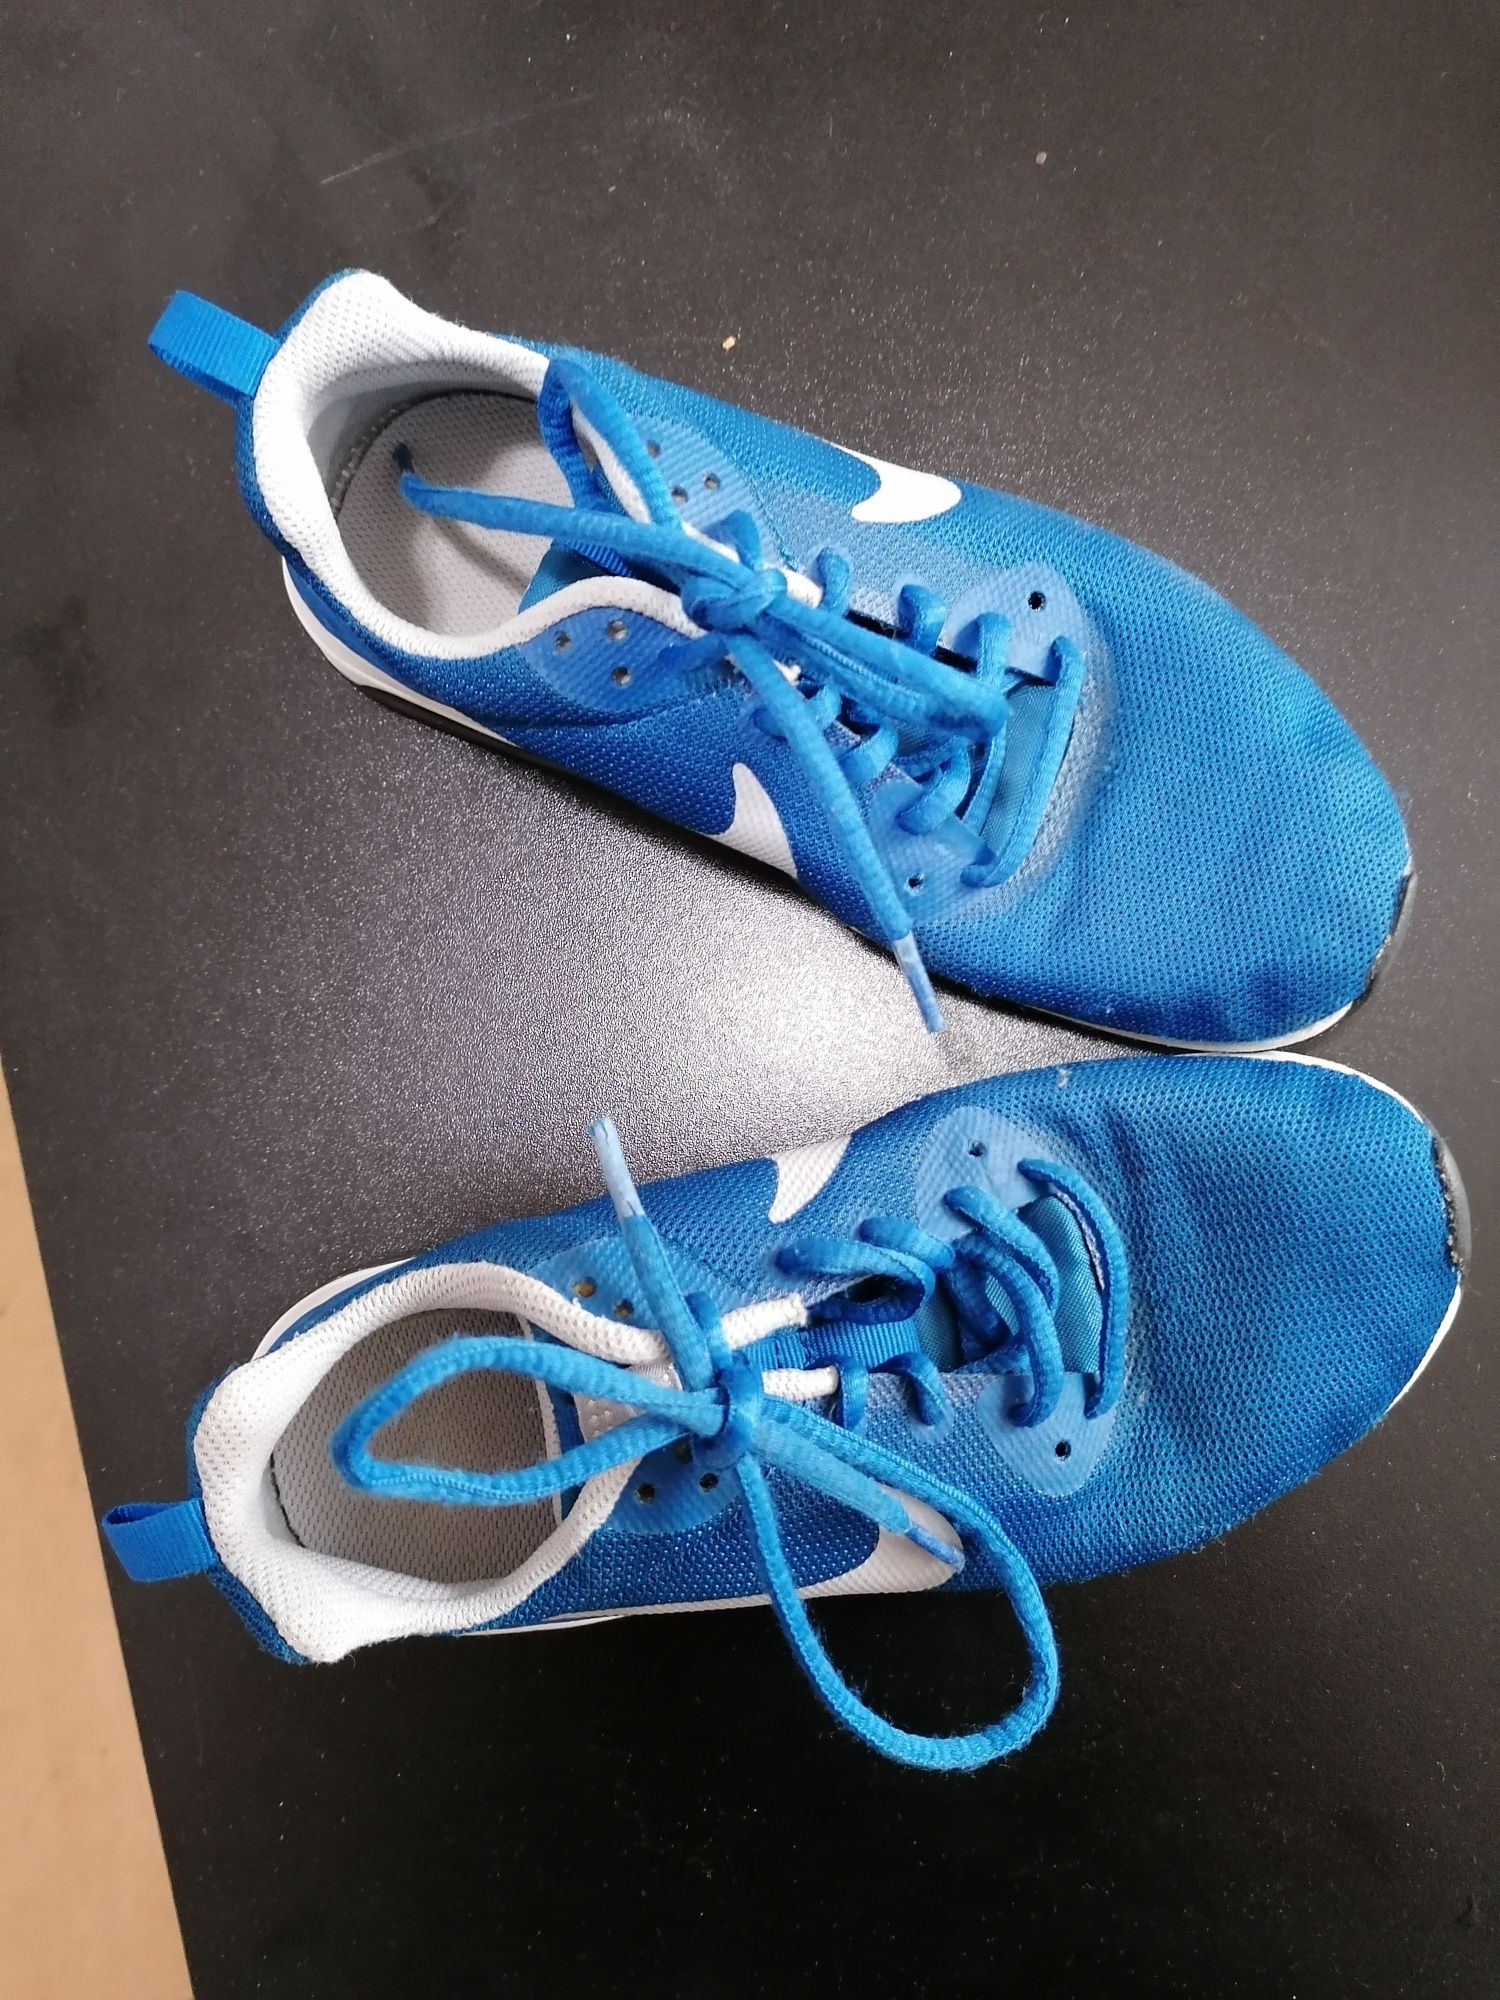 Adidasi Nike albastri